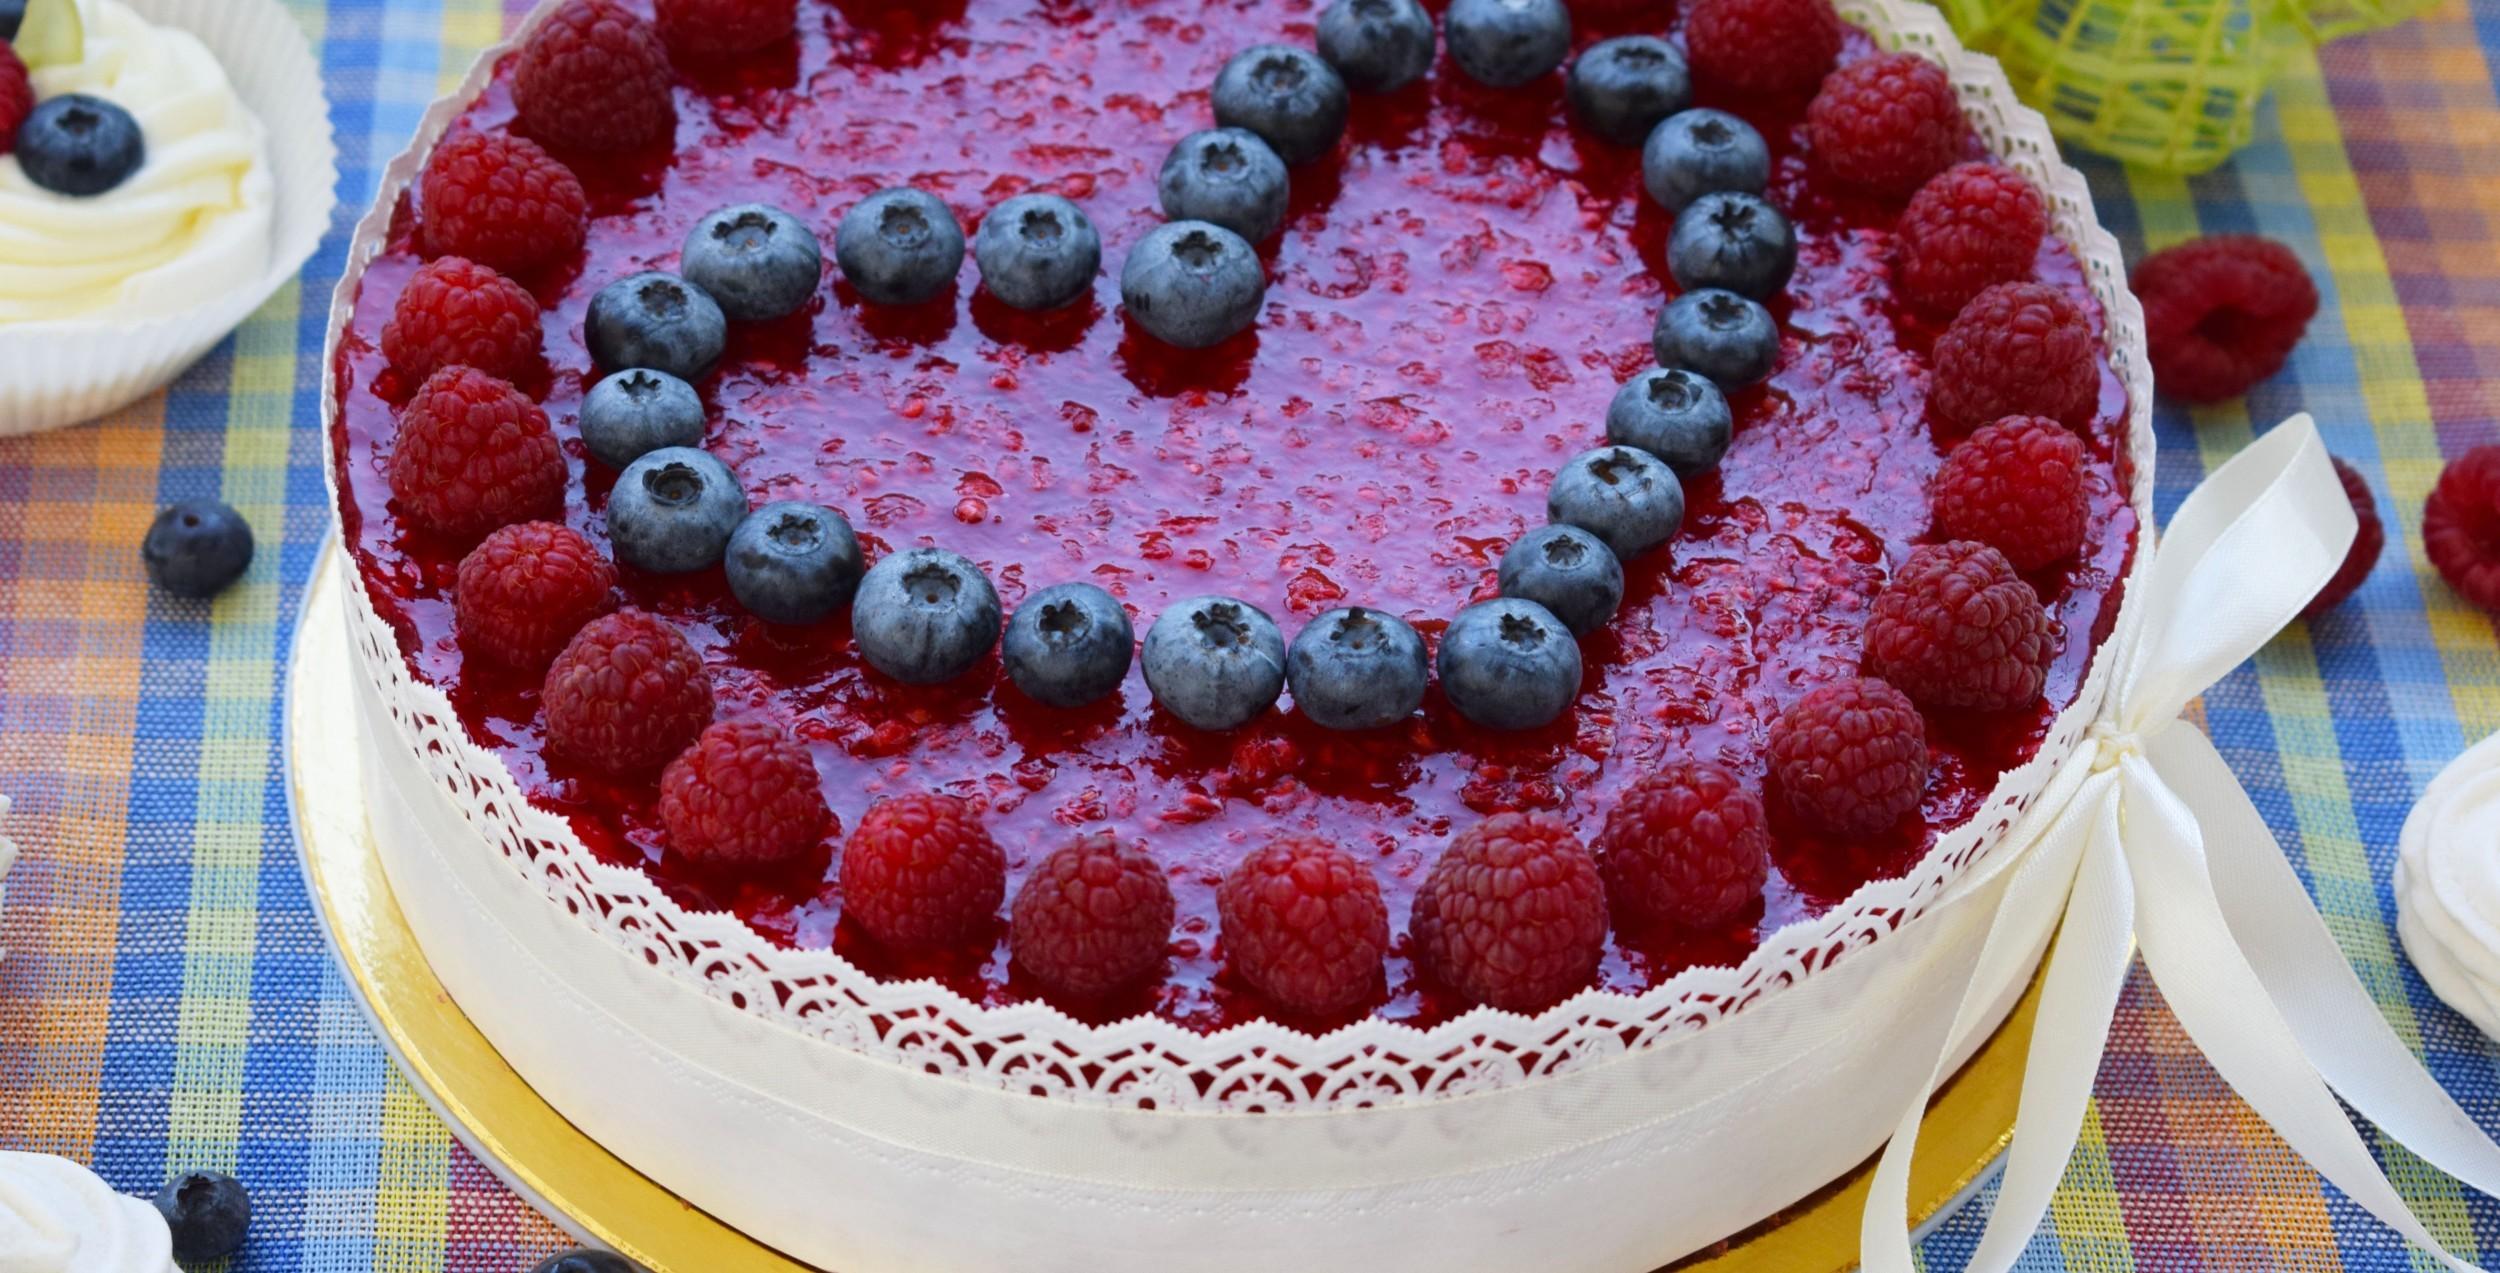 Download 2500x1273 Berry Cake, Dessert, Raspberries, Blueberries